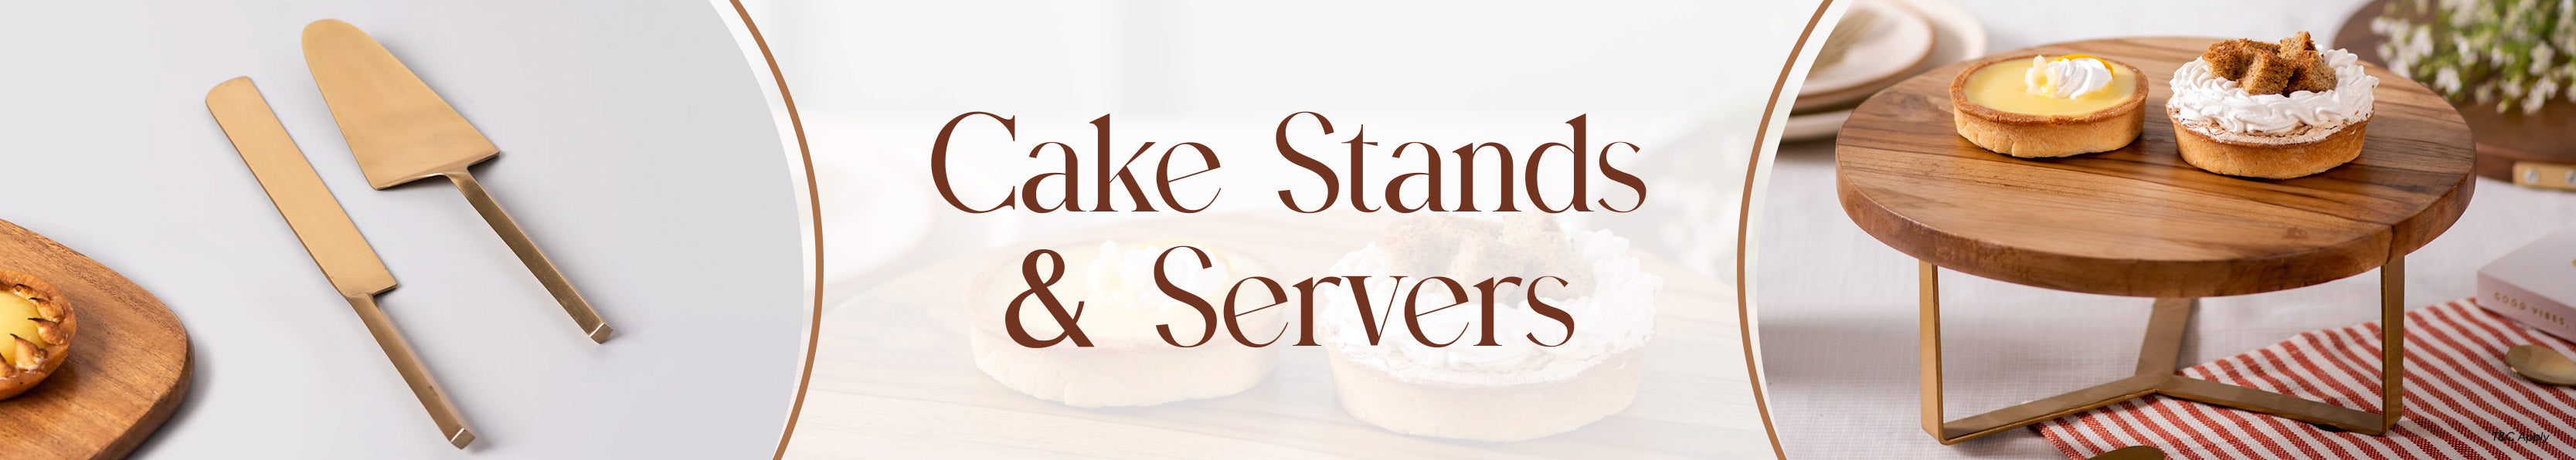 Cake Stands & Servers